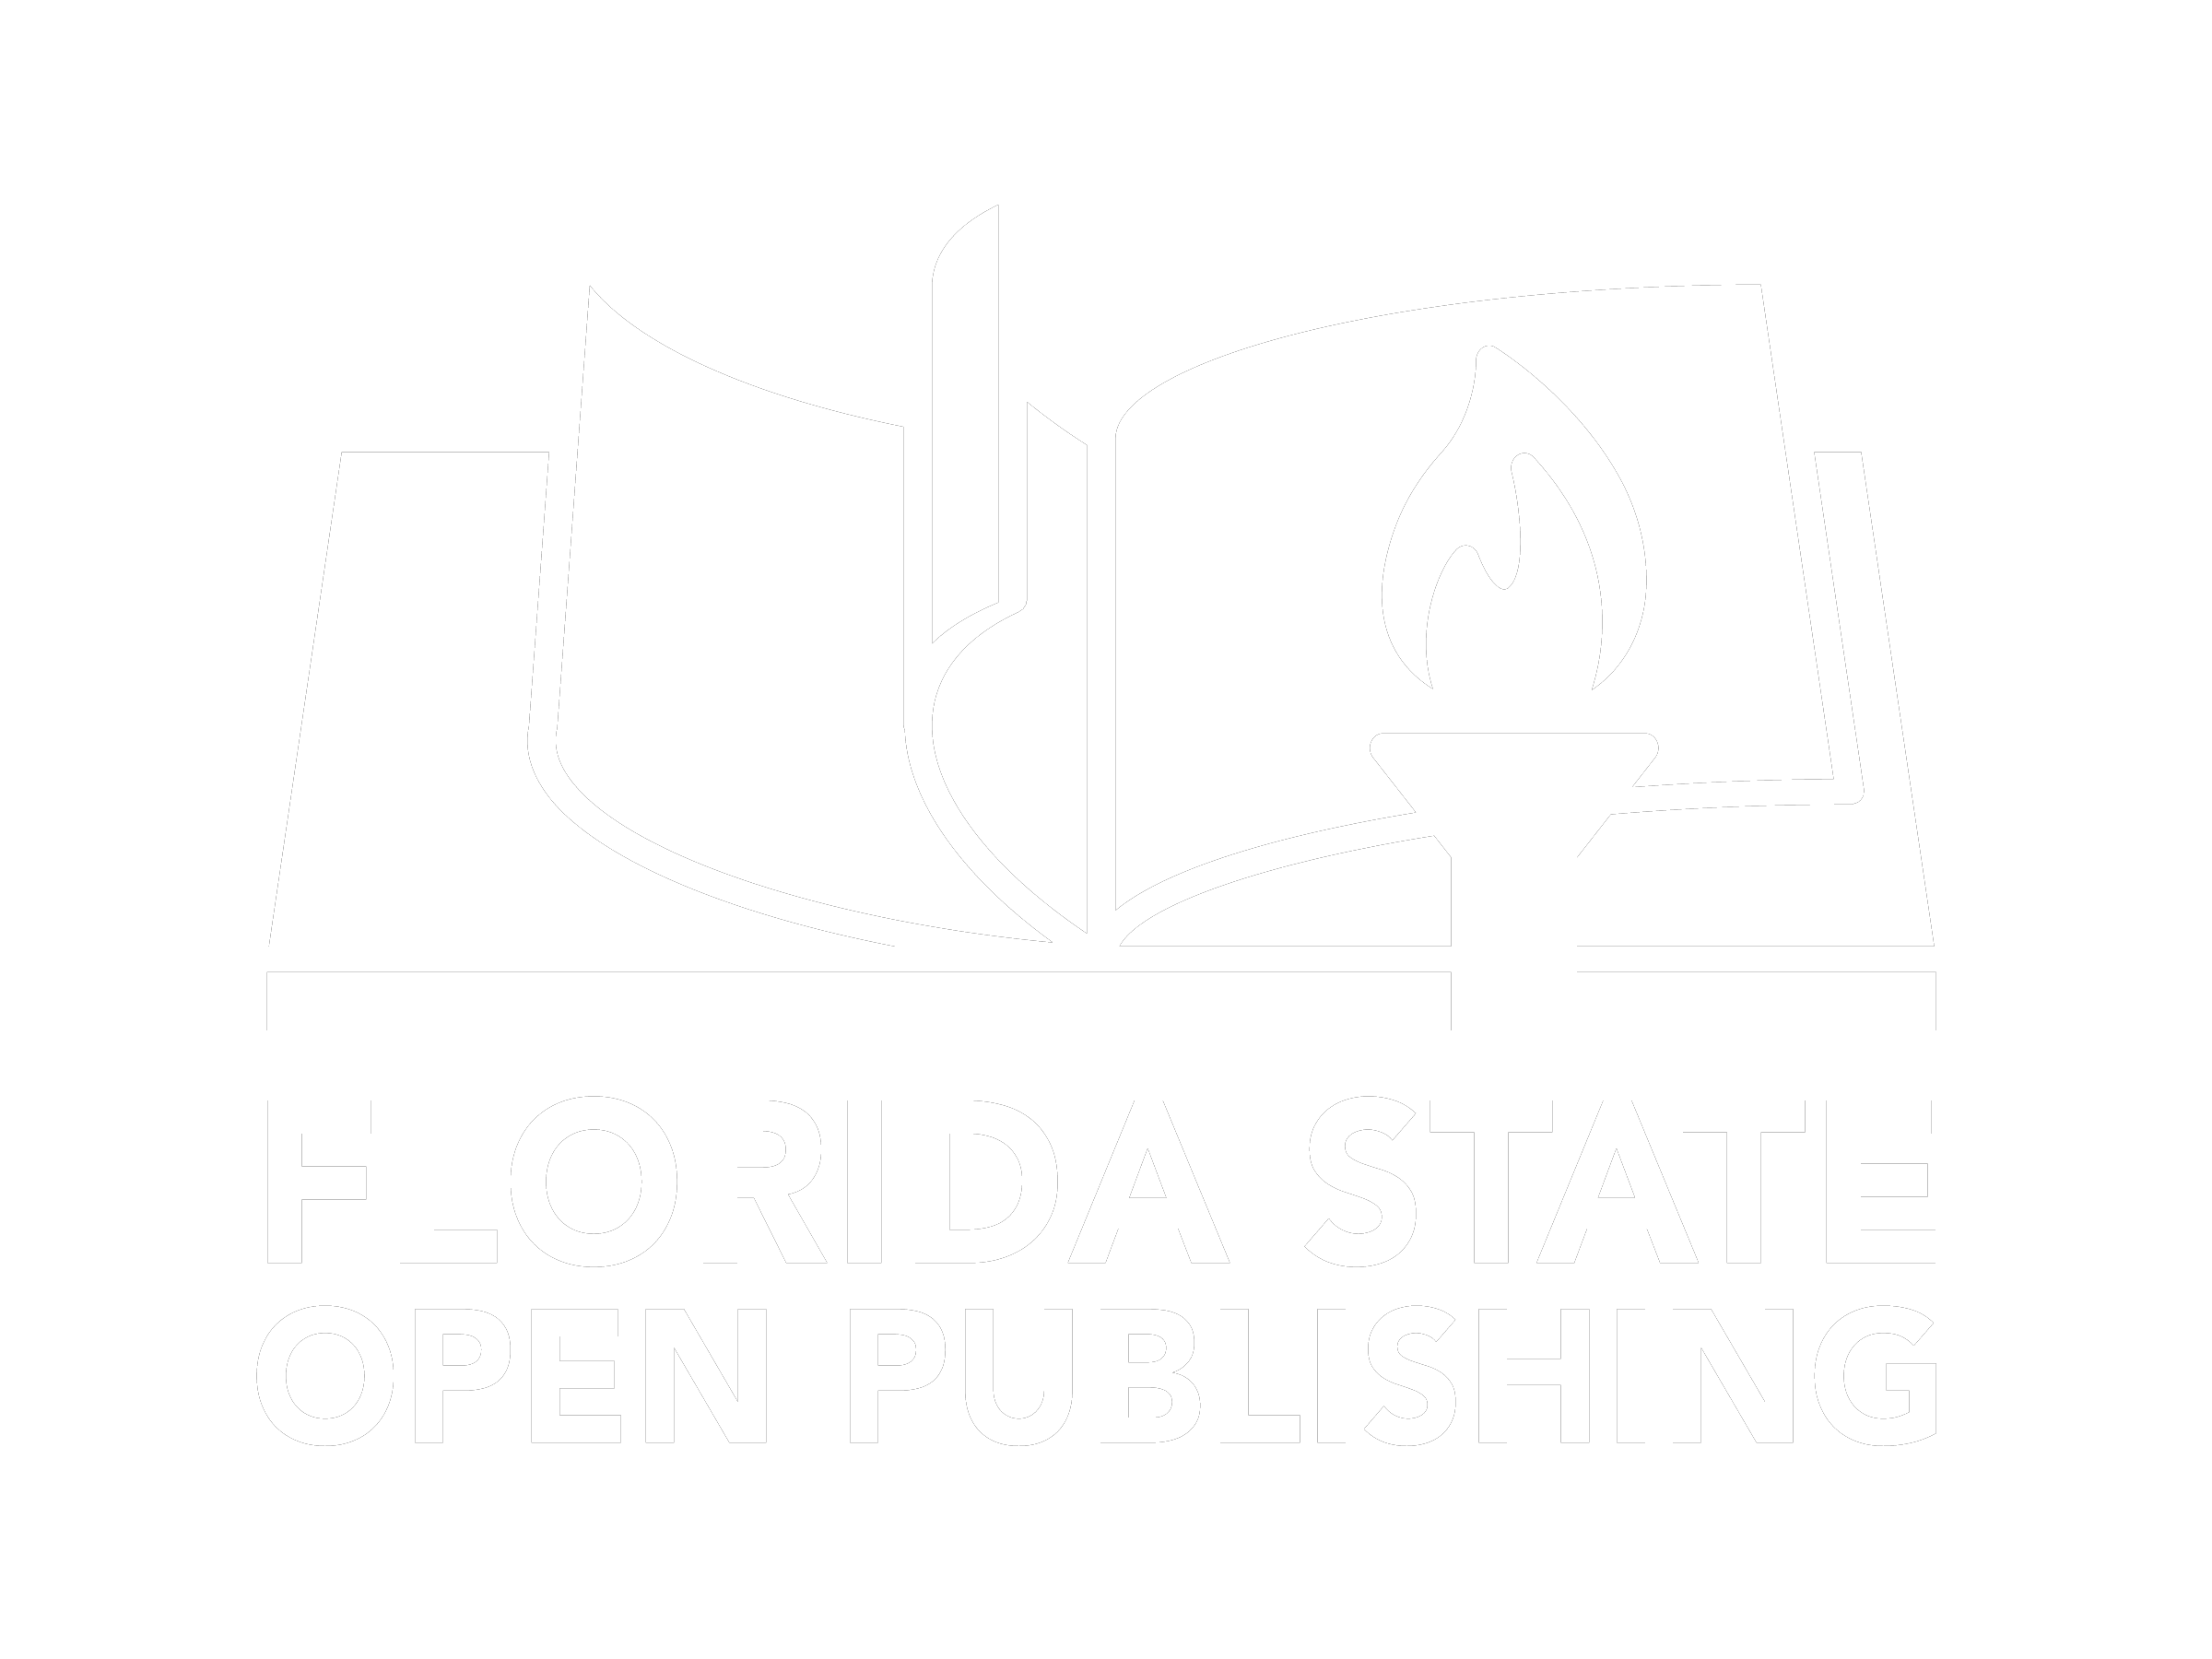 Florida State Open Publishing